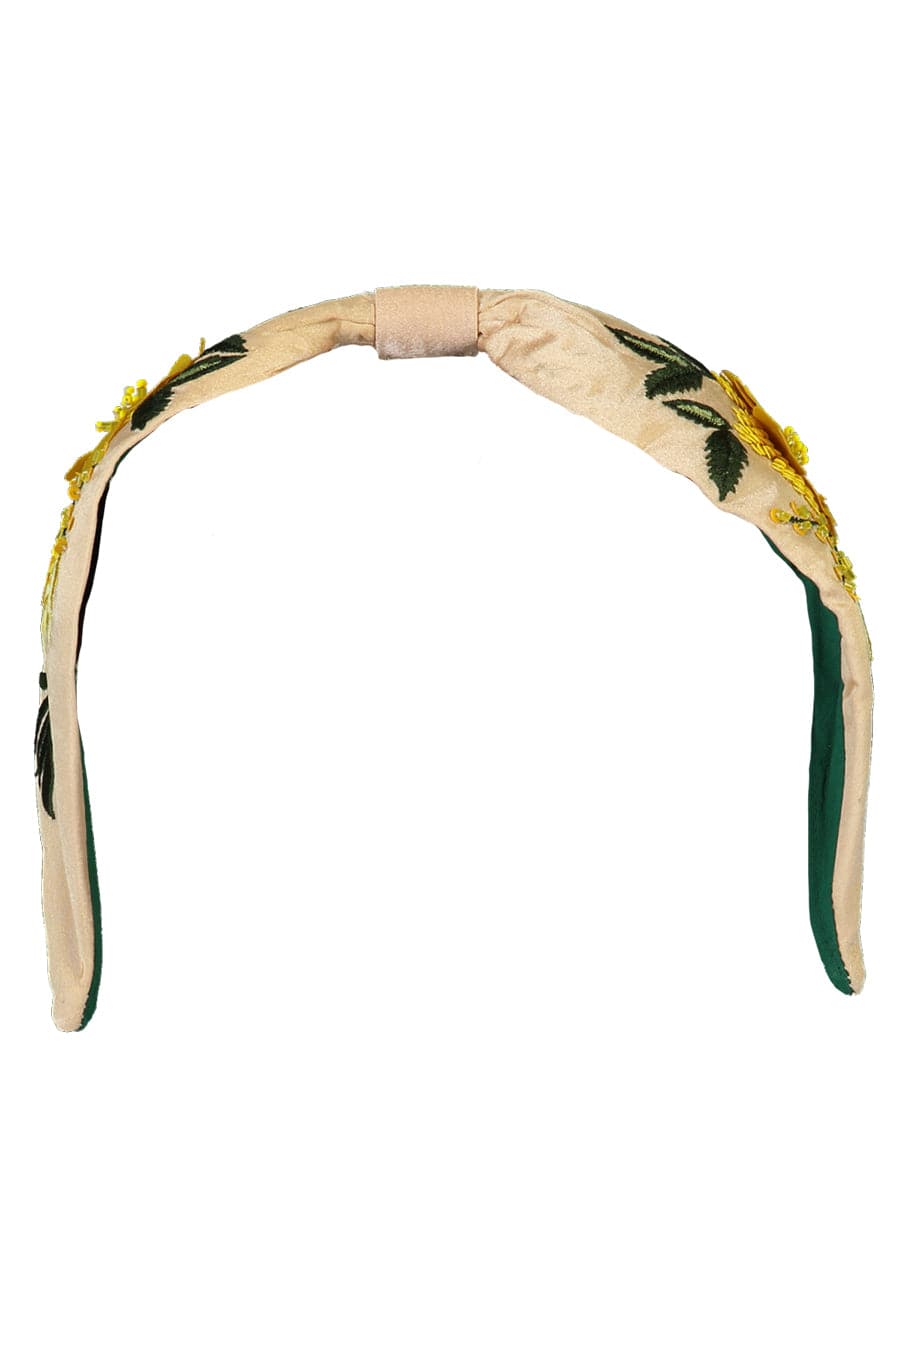 NAMJOSH-Allamanda Flower Headband-YELLOW